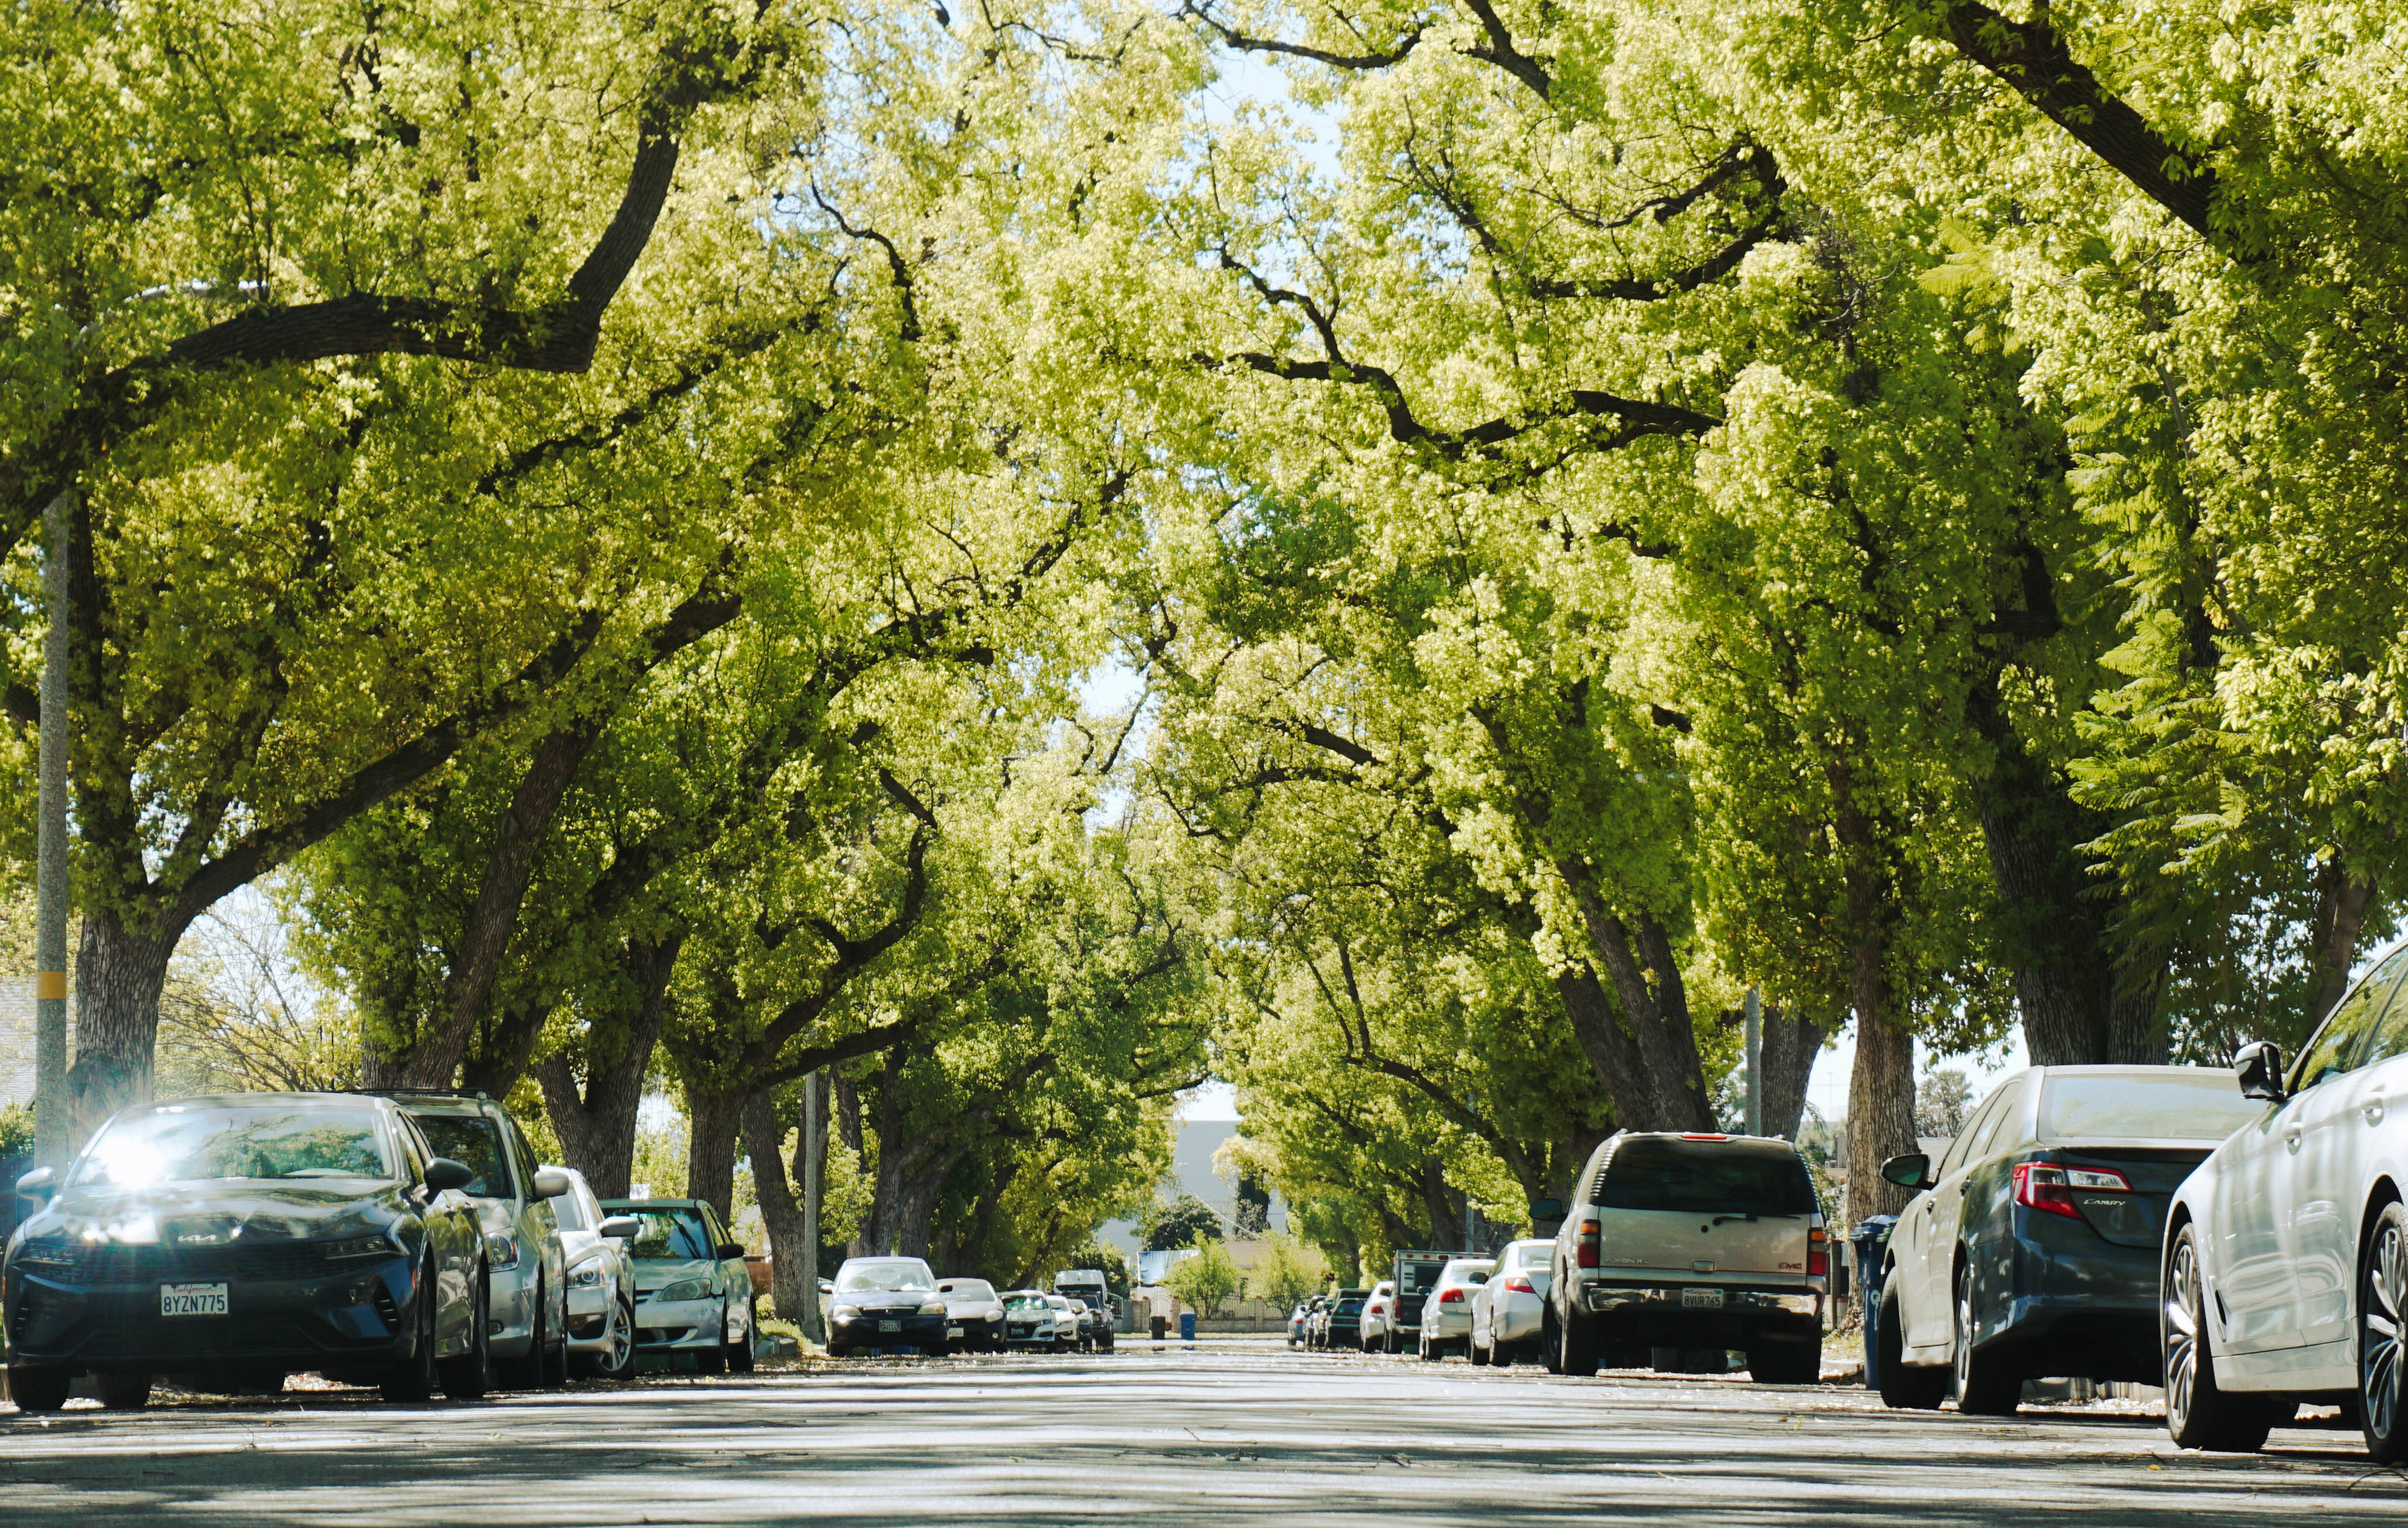 Bright camphor trees along a neighborhood street